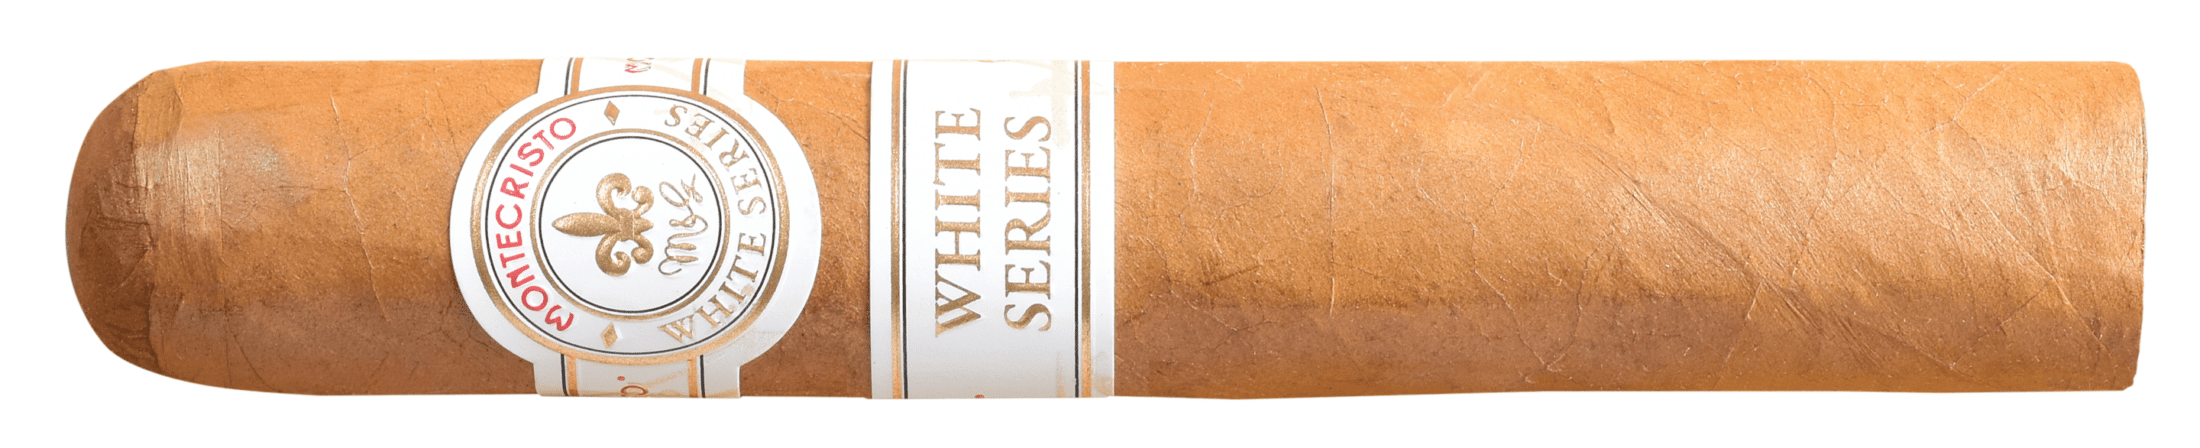 montecristo white toro single cigar